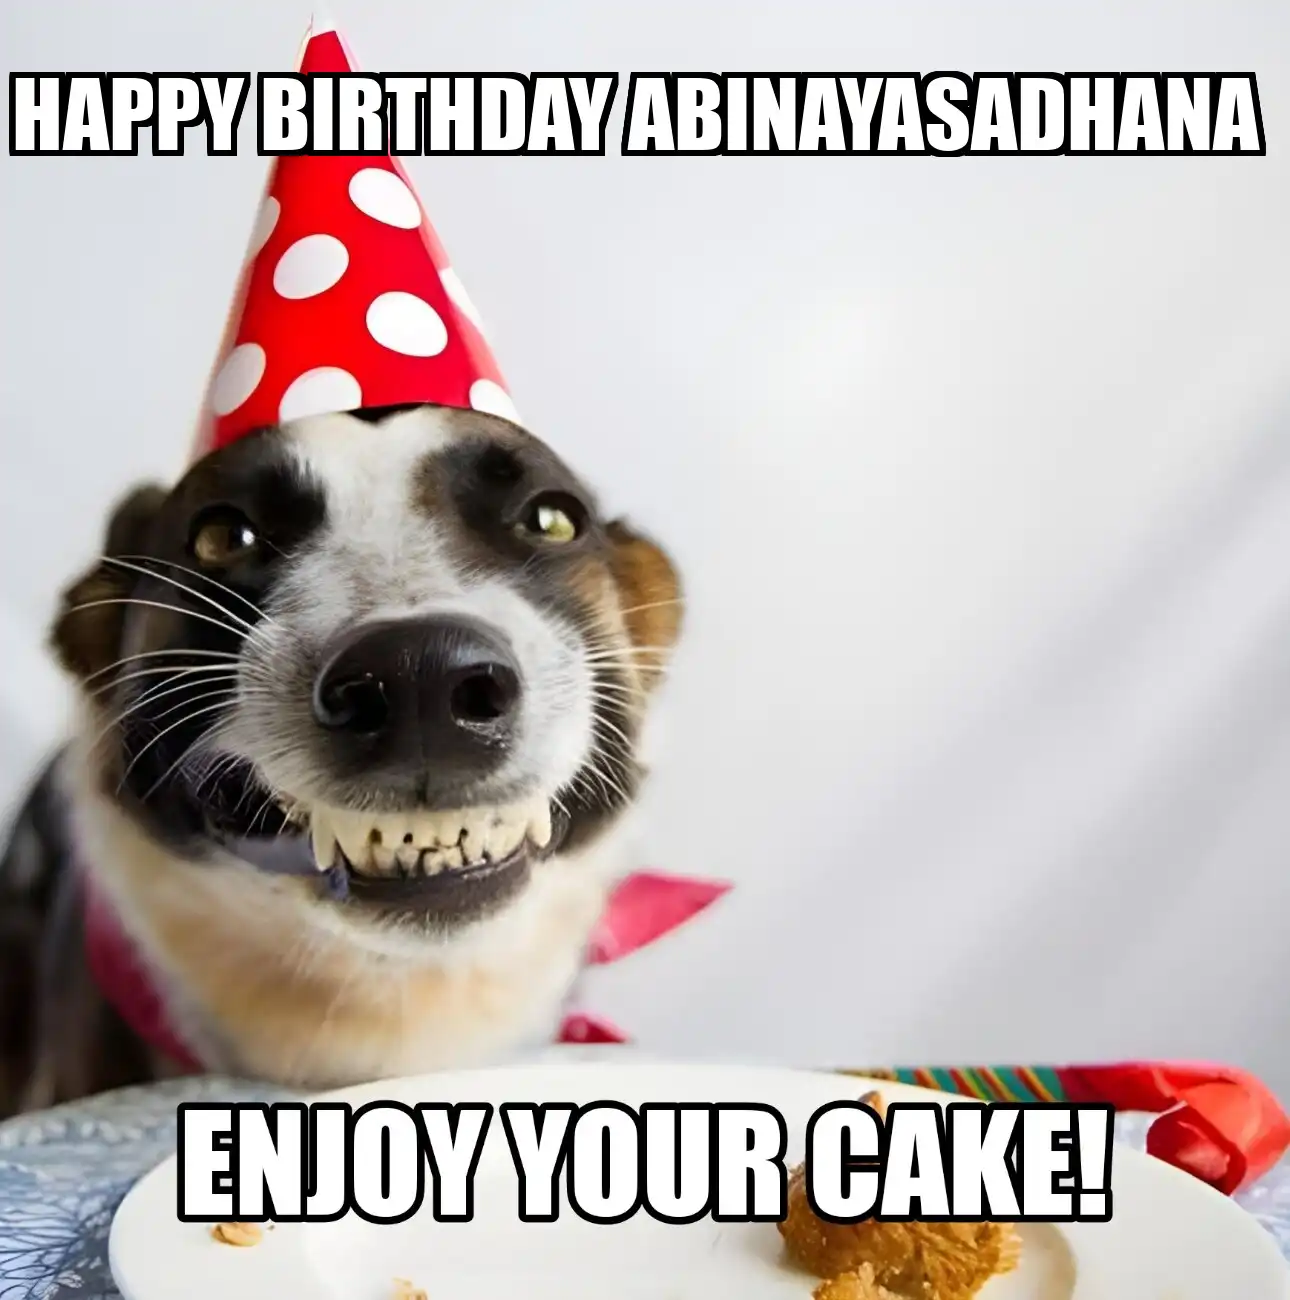 Happy Birthday Abinayasadhana Enjoy Your Cake Dog Meme